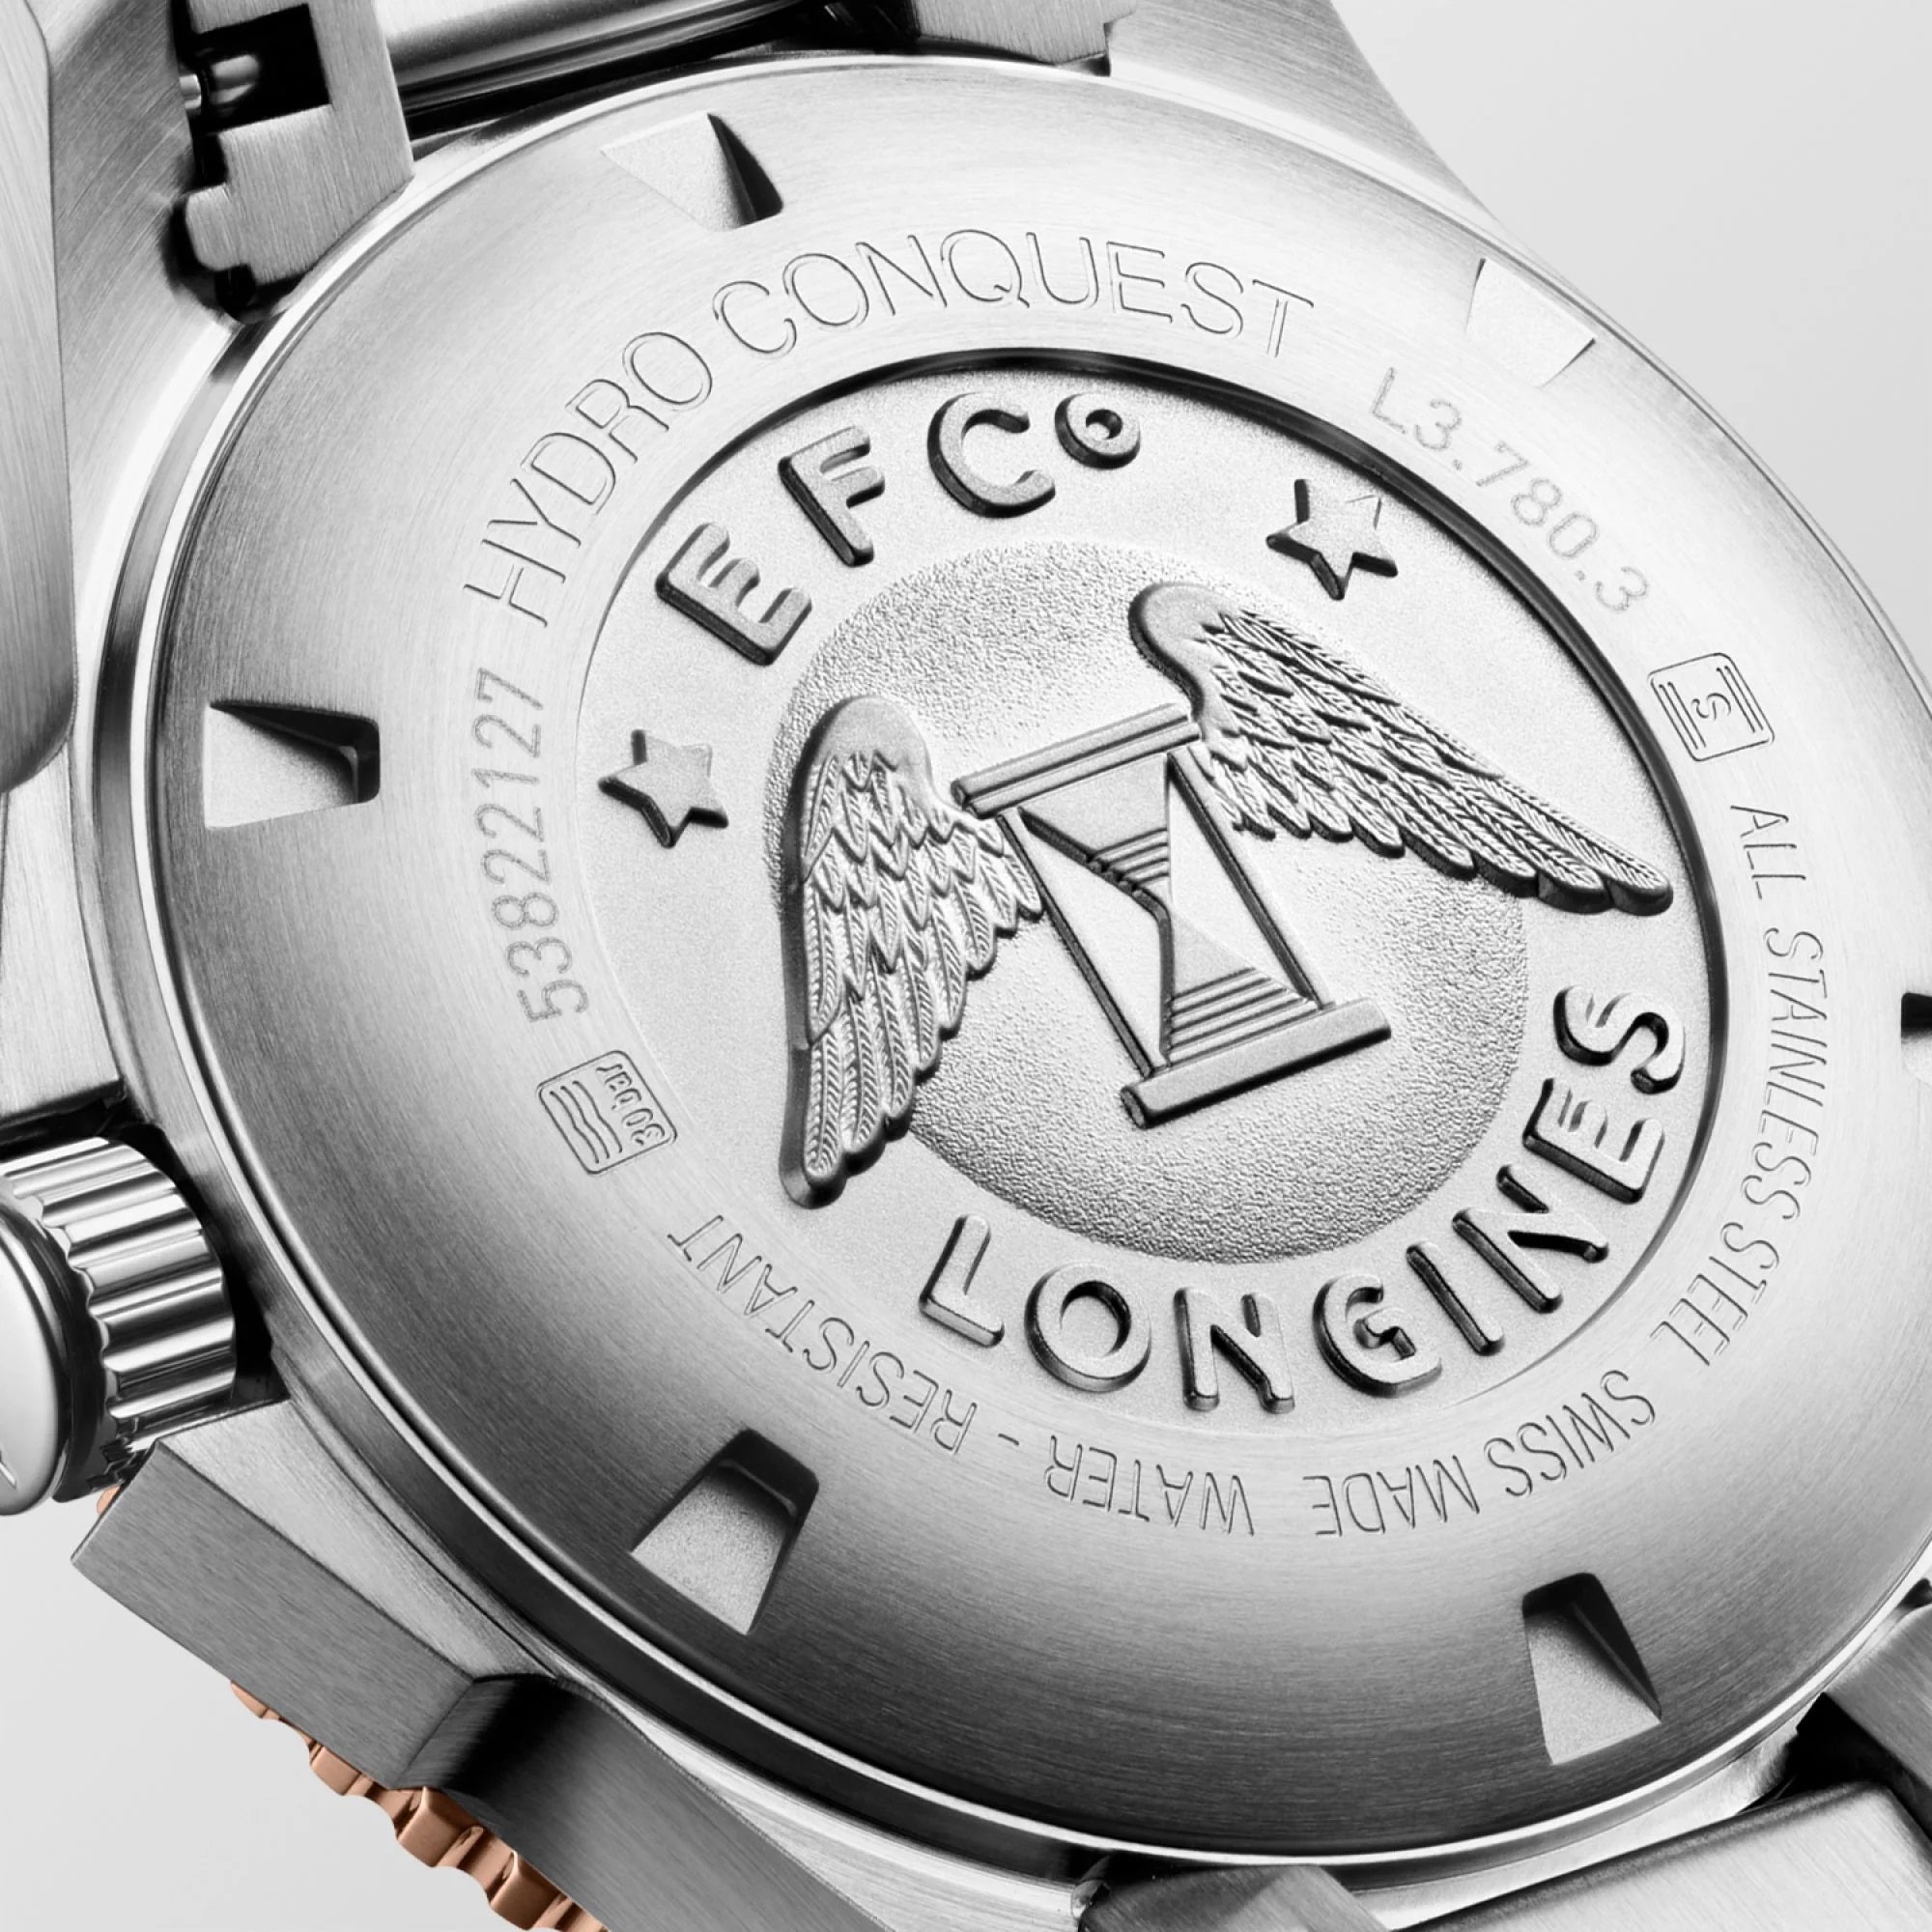 Longines HYDROCONQUEST 39mm | Men's Longines Watch | Harley's Time LLC